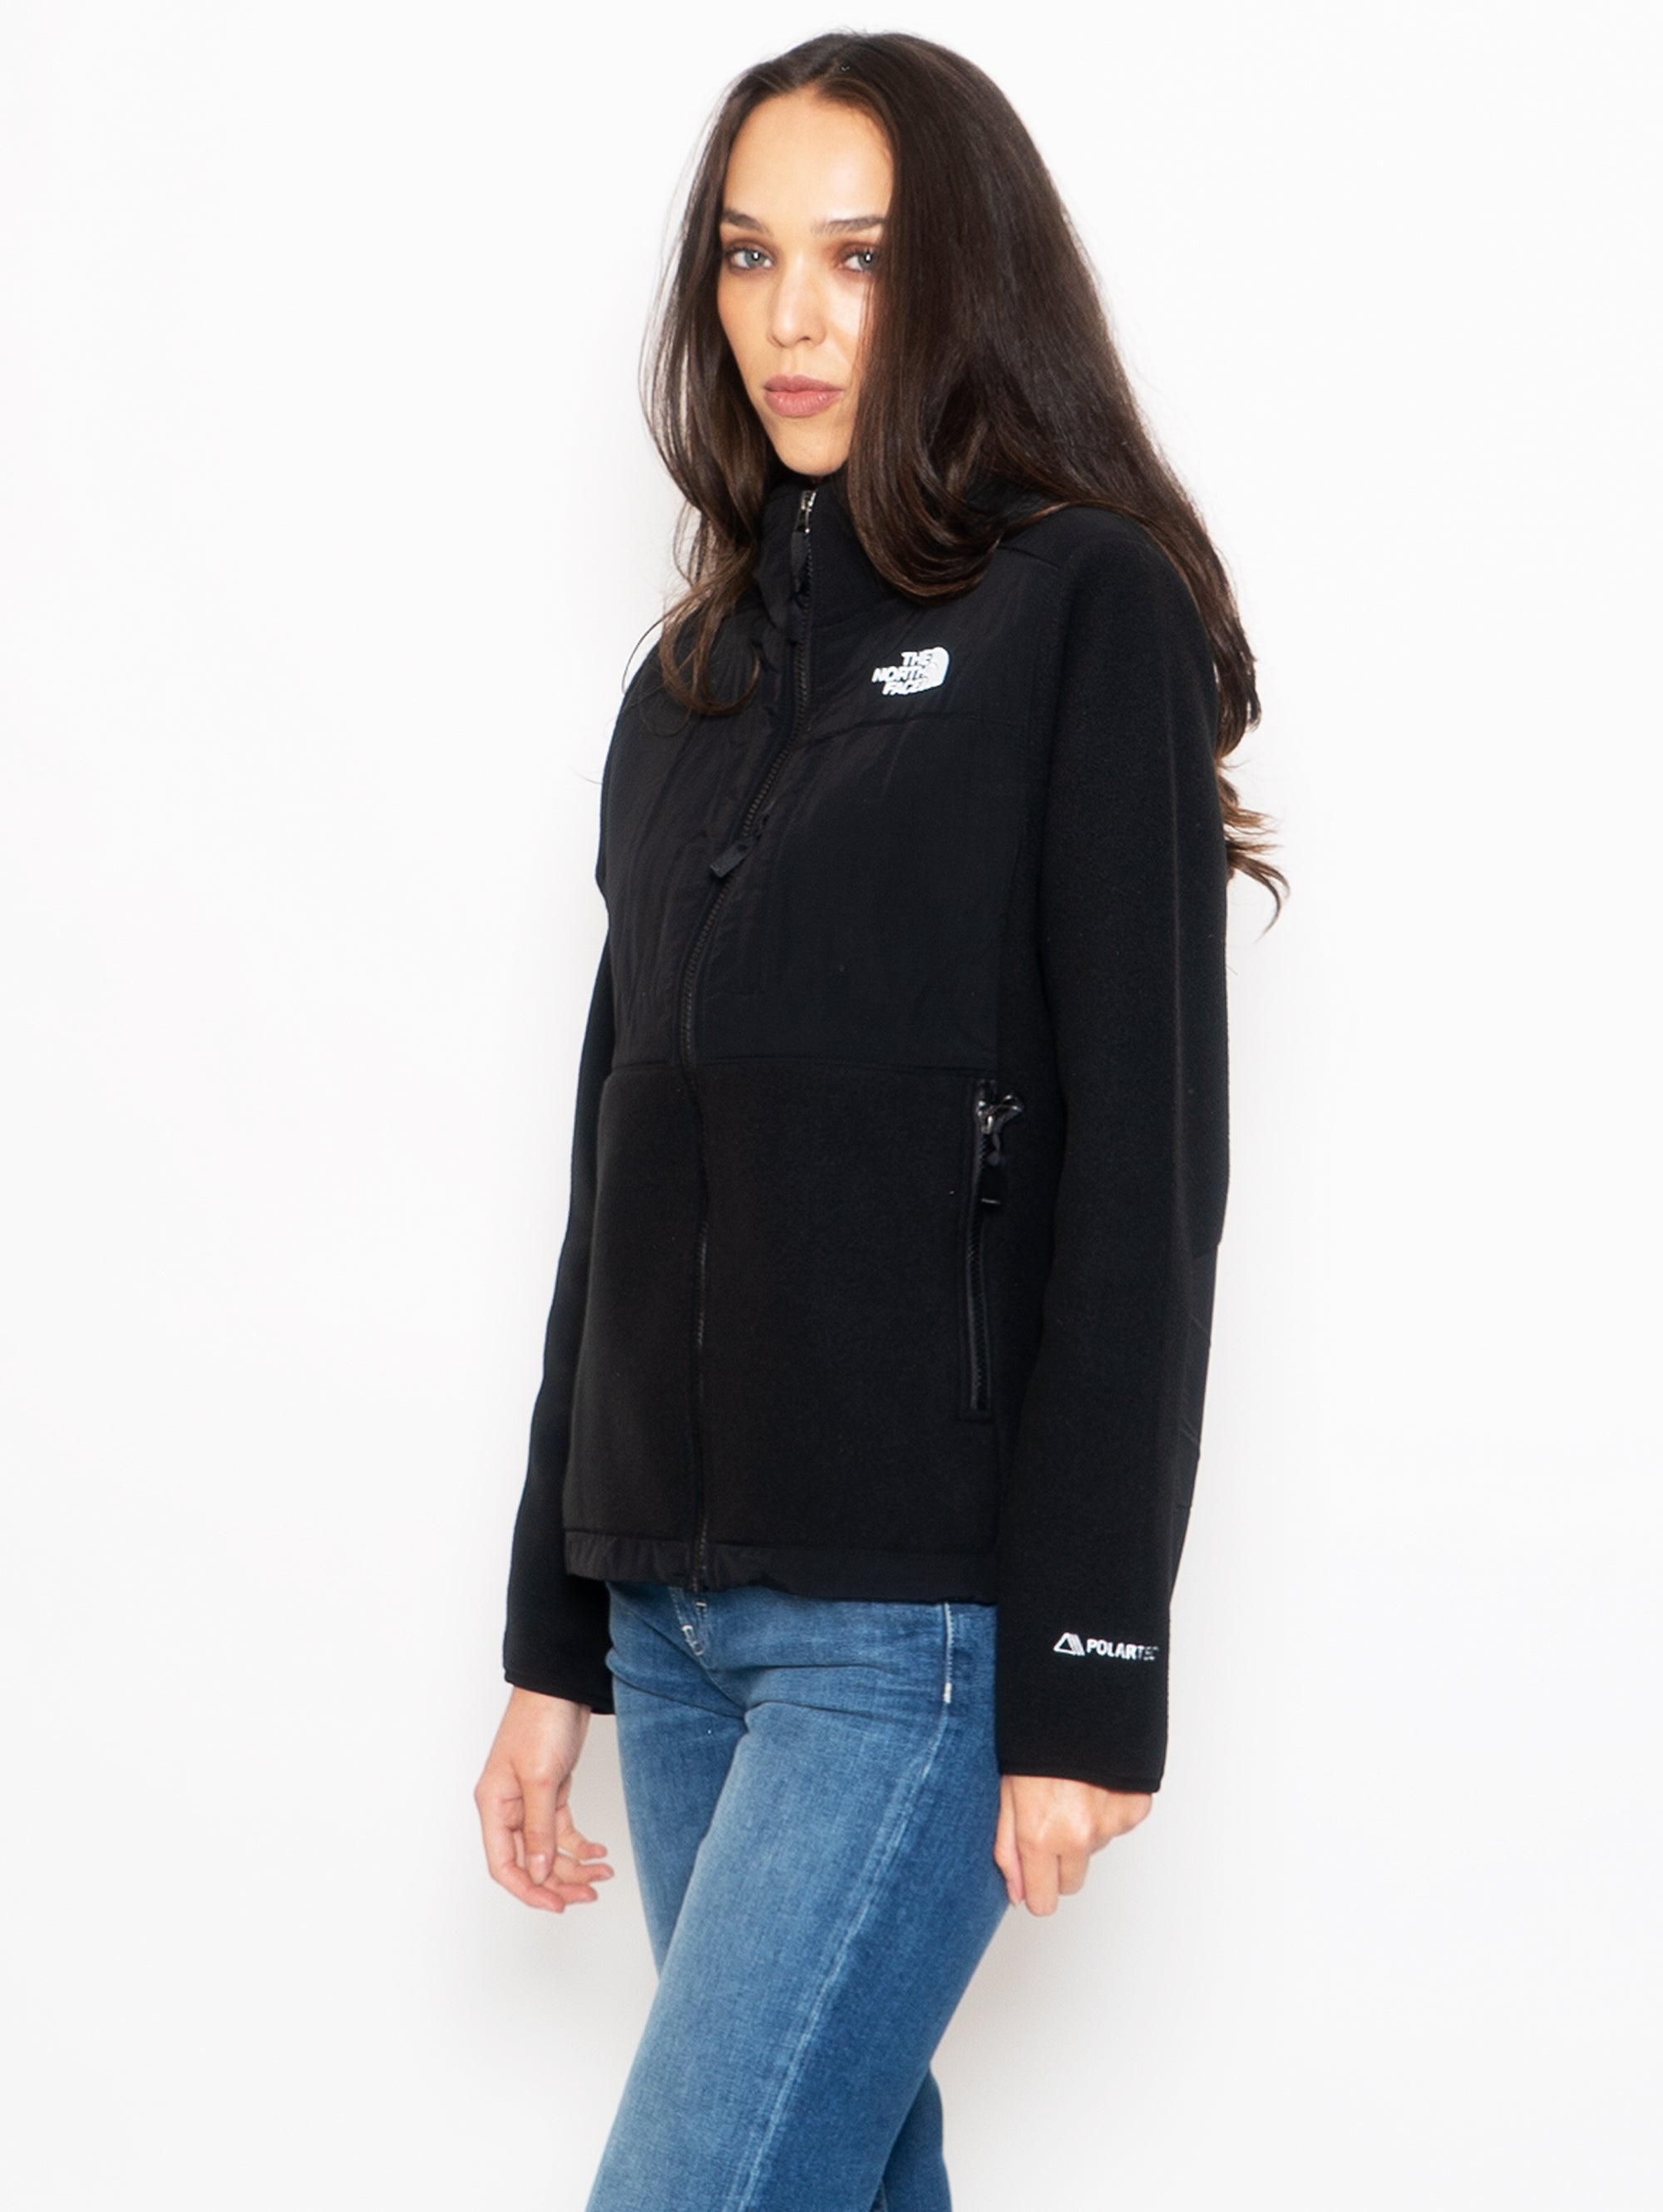 Denali Recycled Polartec Fleece Jacket for Women Black